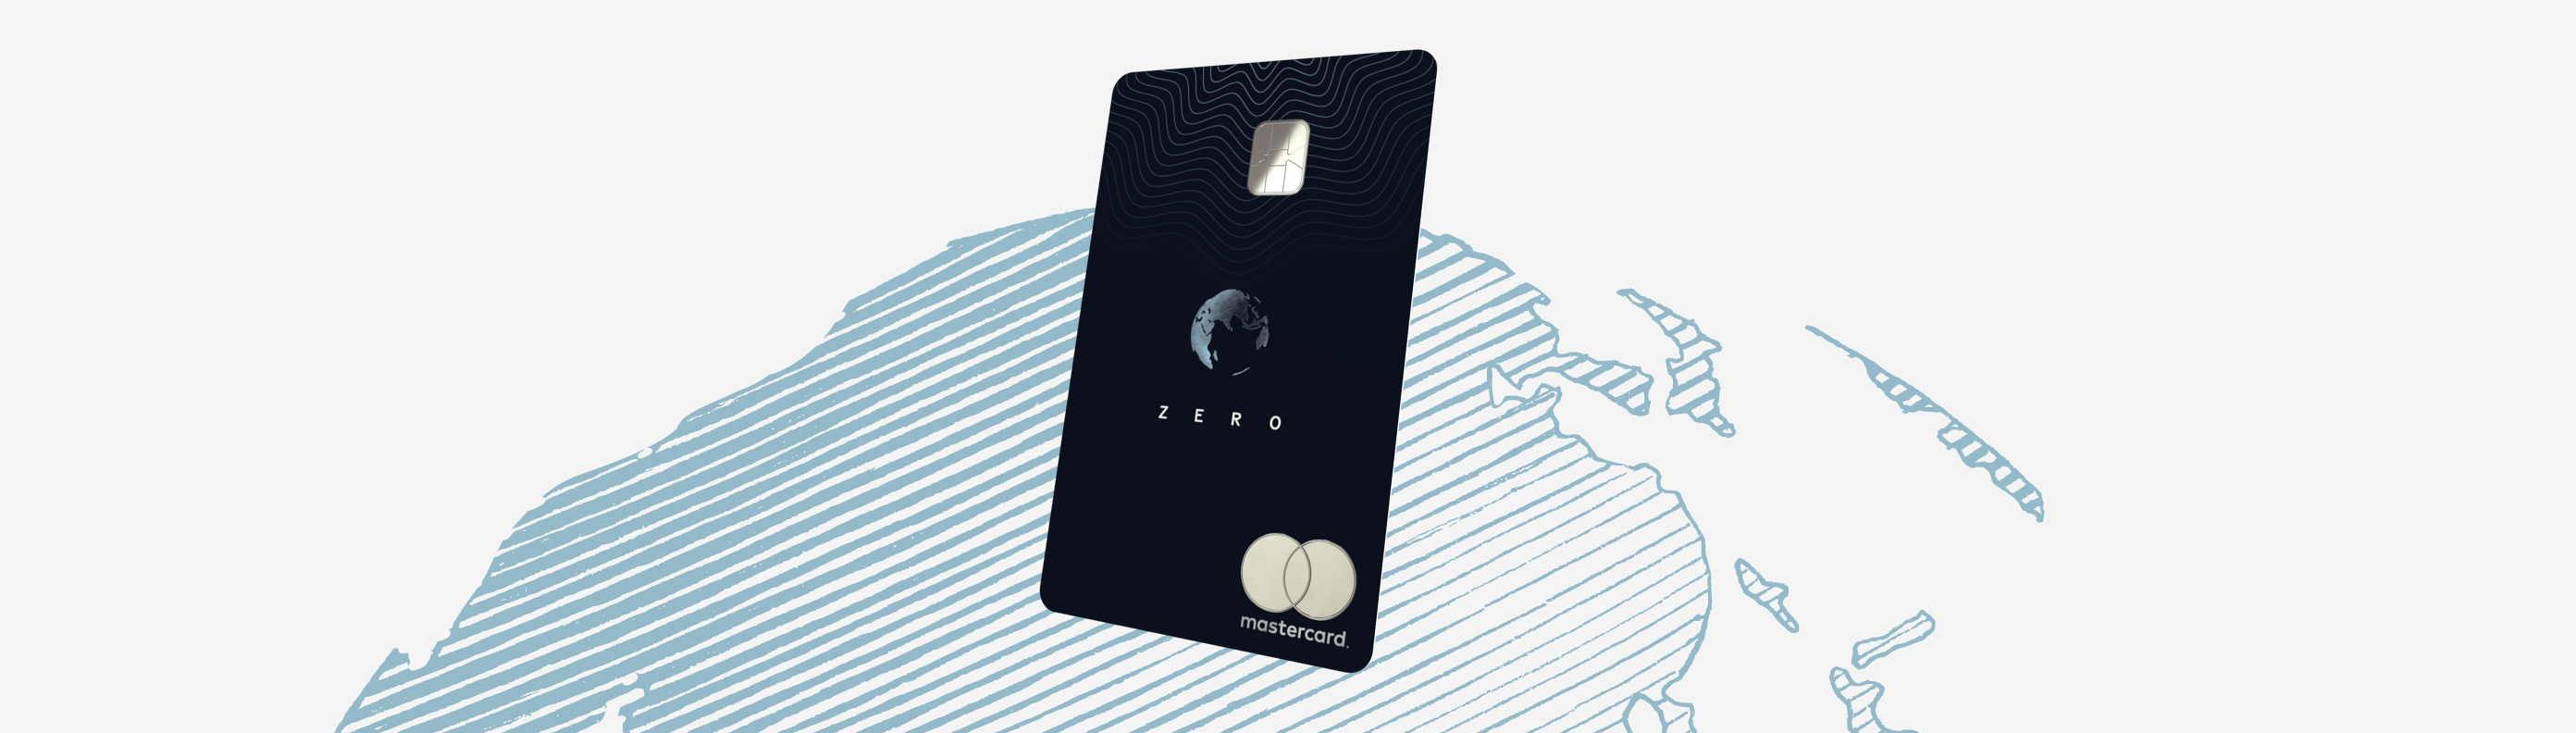 Aspiration Announces Earth-Friendly Aspiration Zero Credit Card